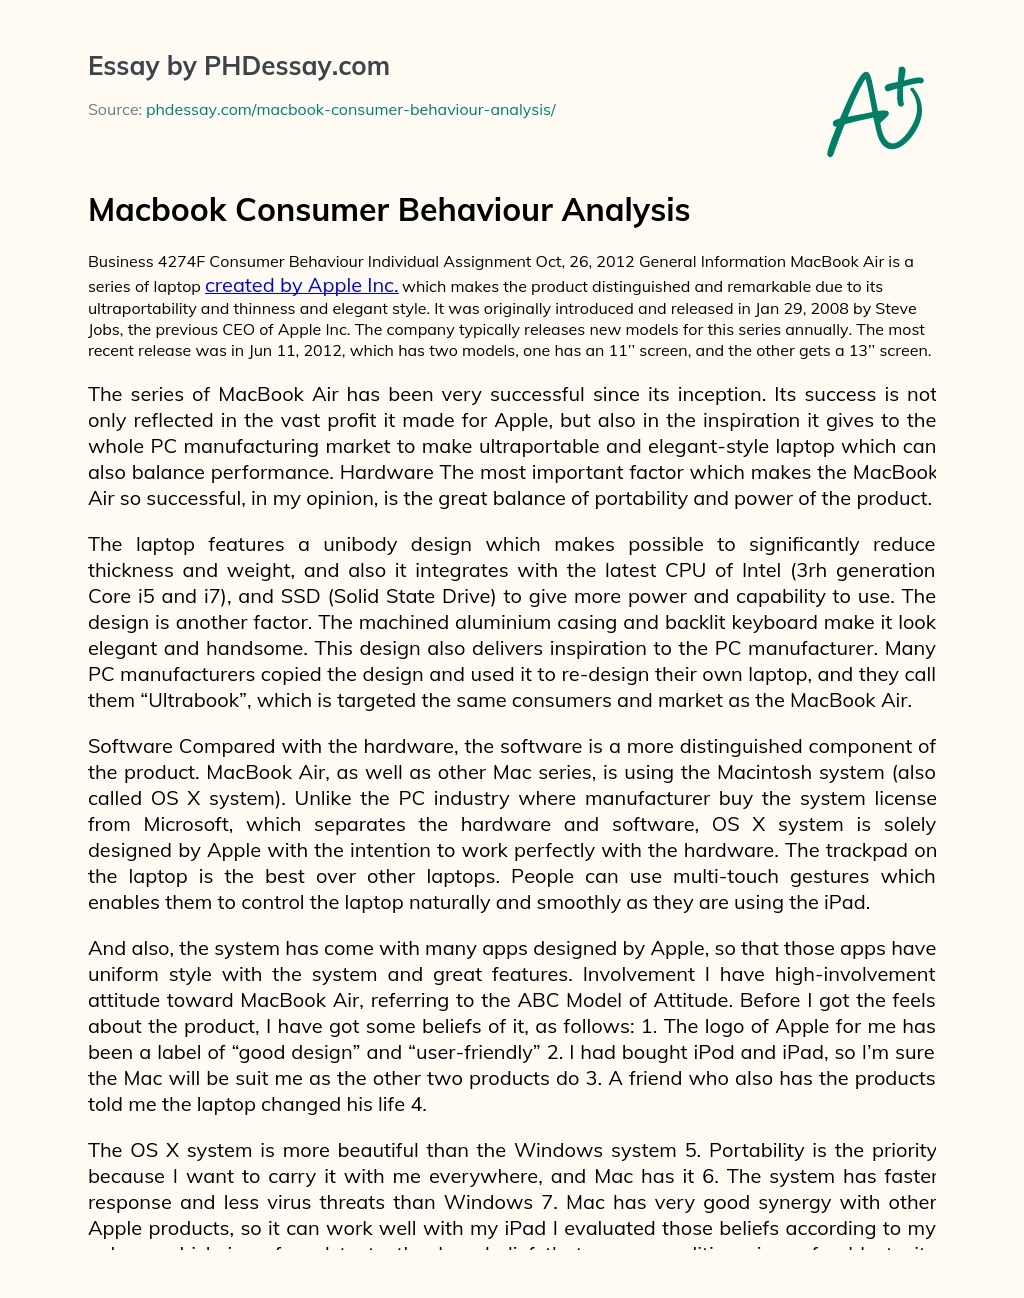 Macbook Consumer Behaviour Analysis essay